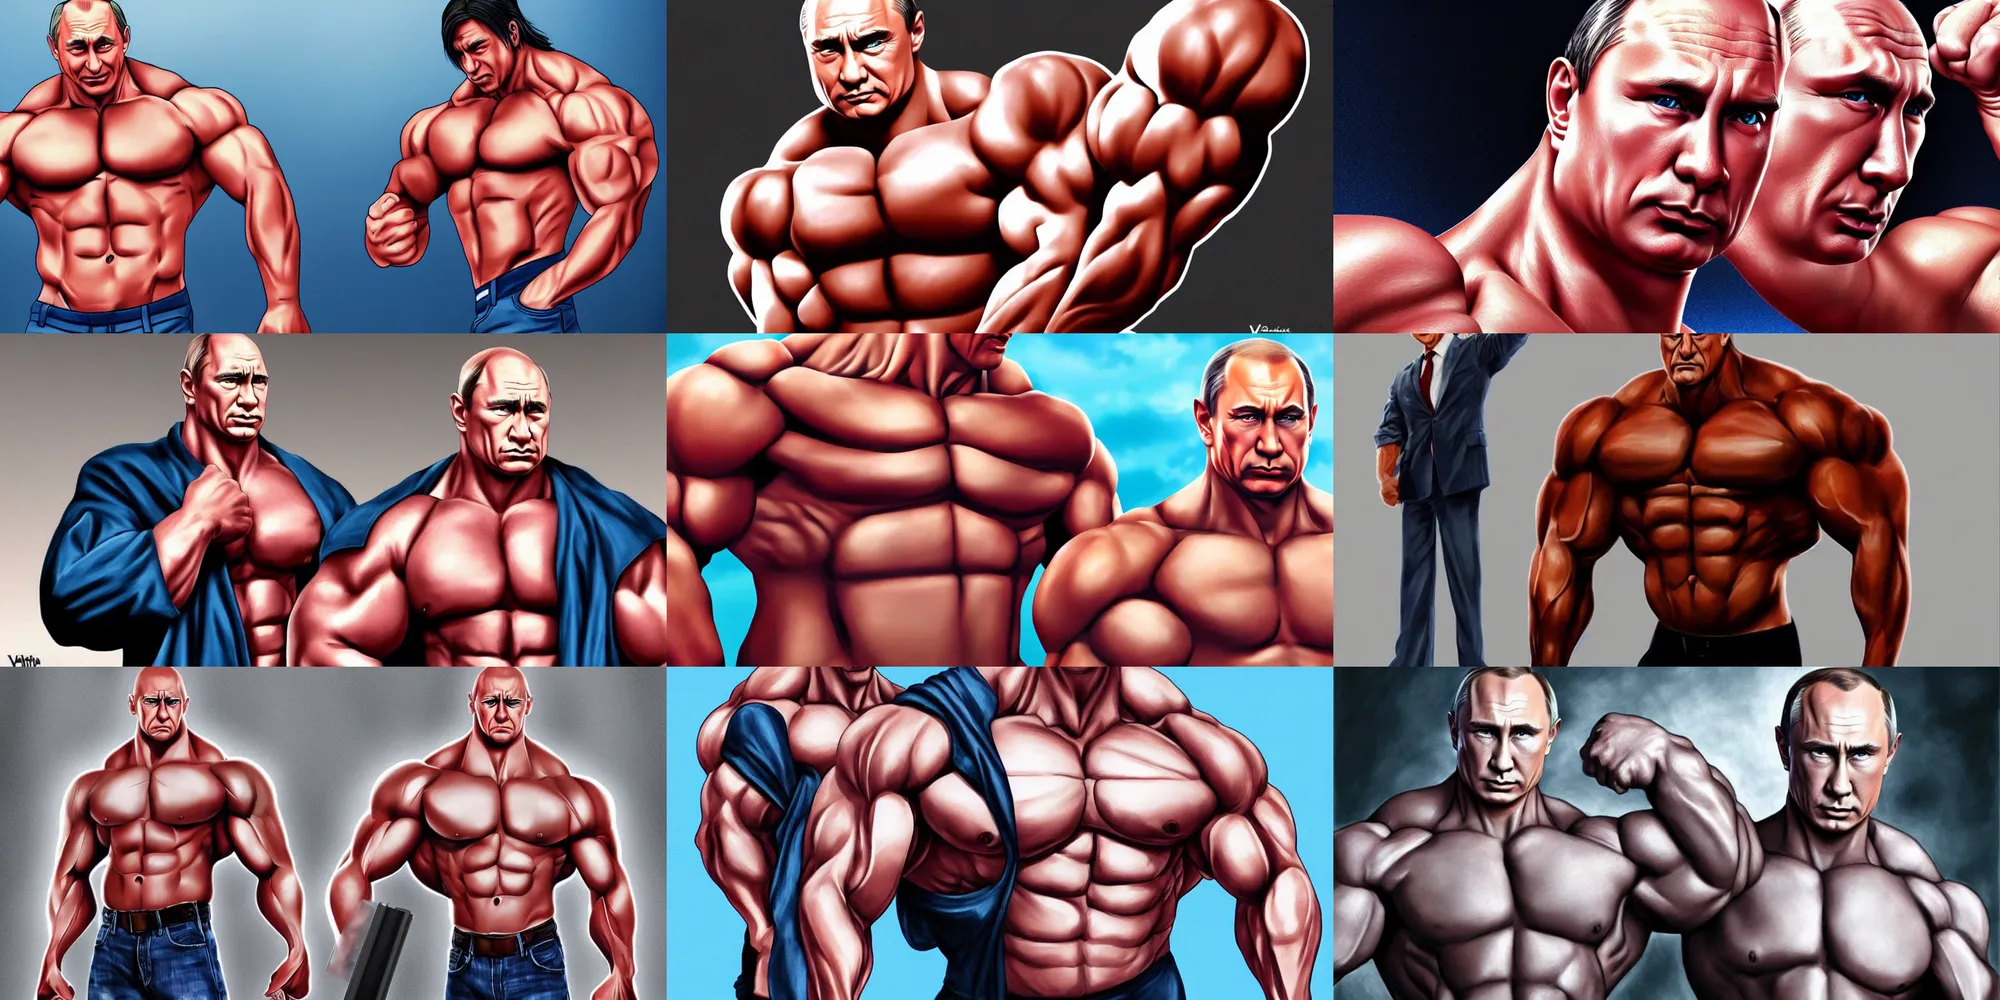 Prompt: vato vladimir putin, big muscles, anime, illustration, hyper realistic